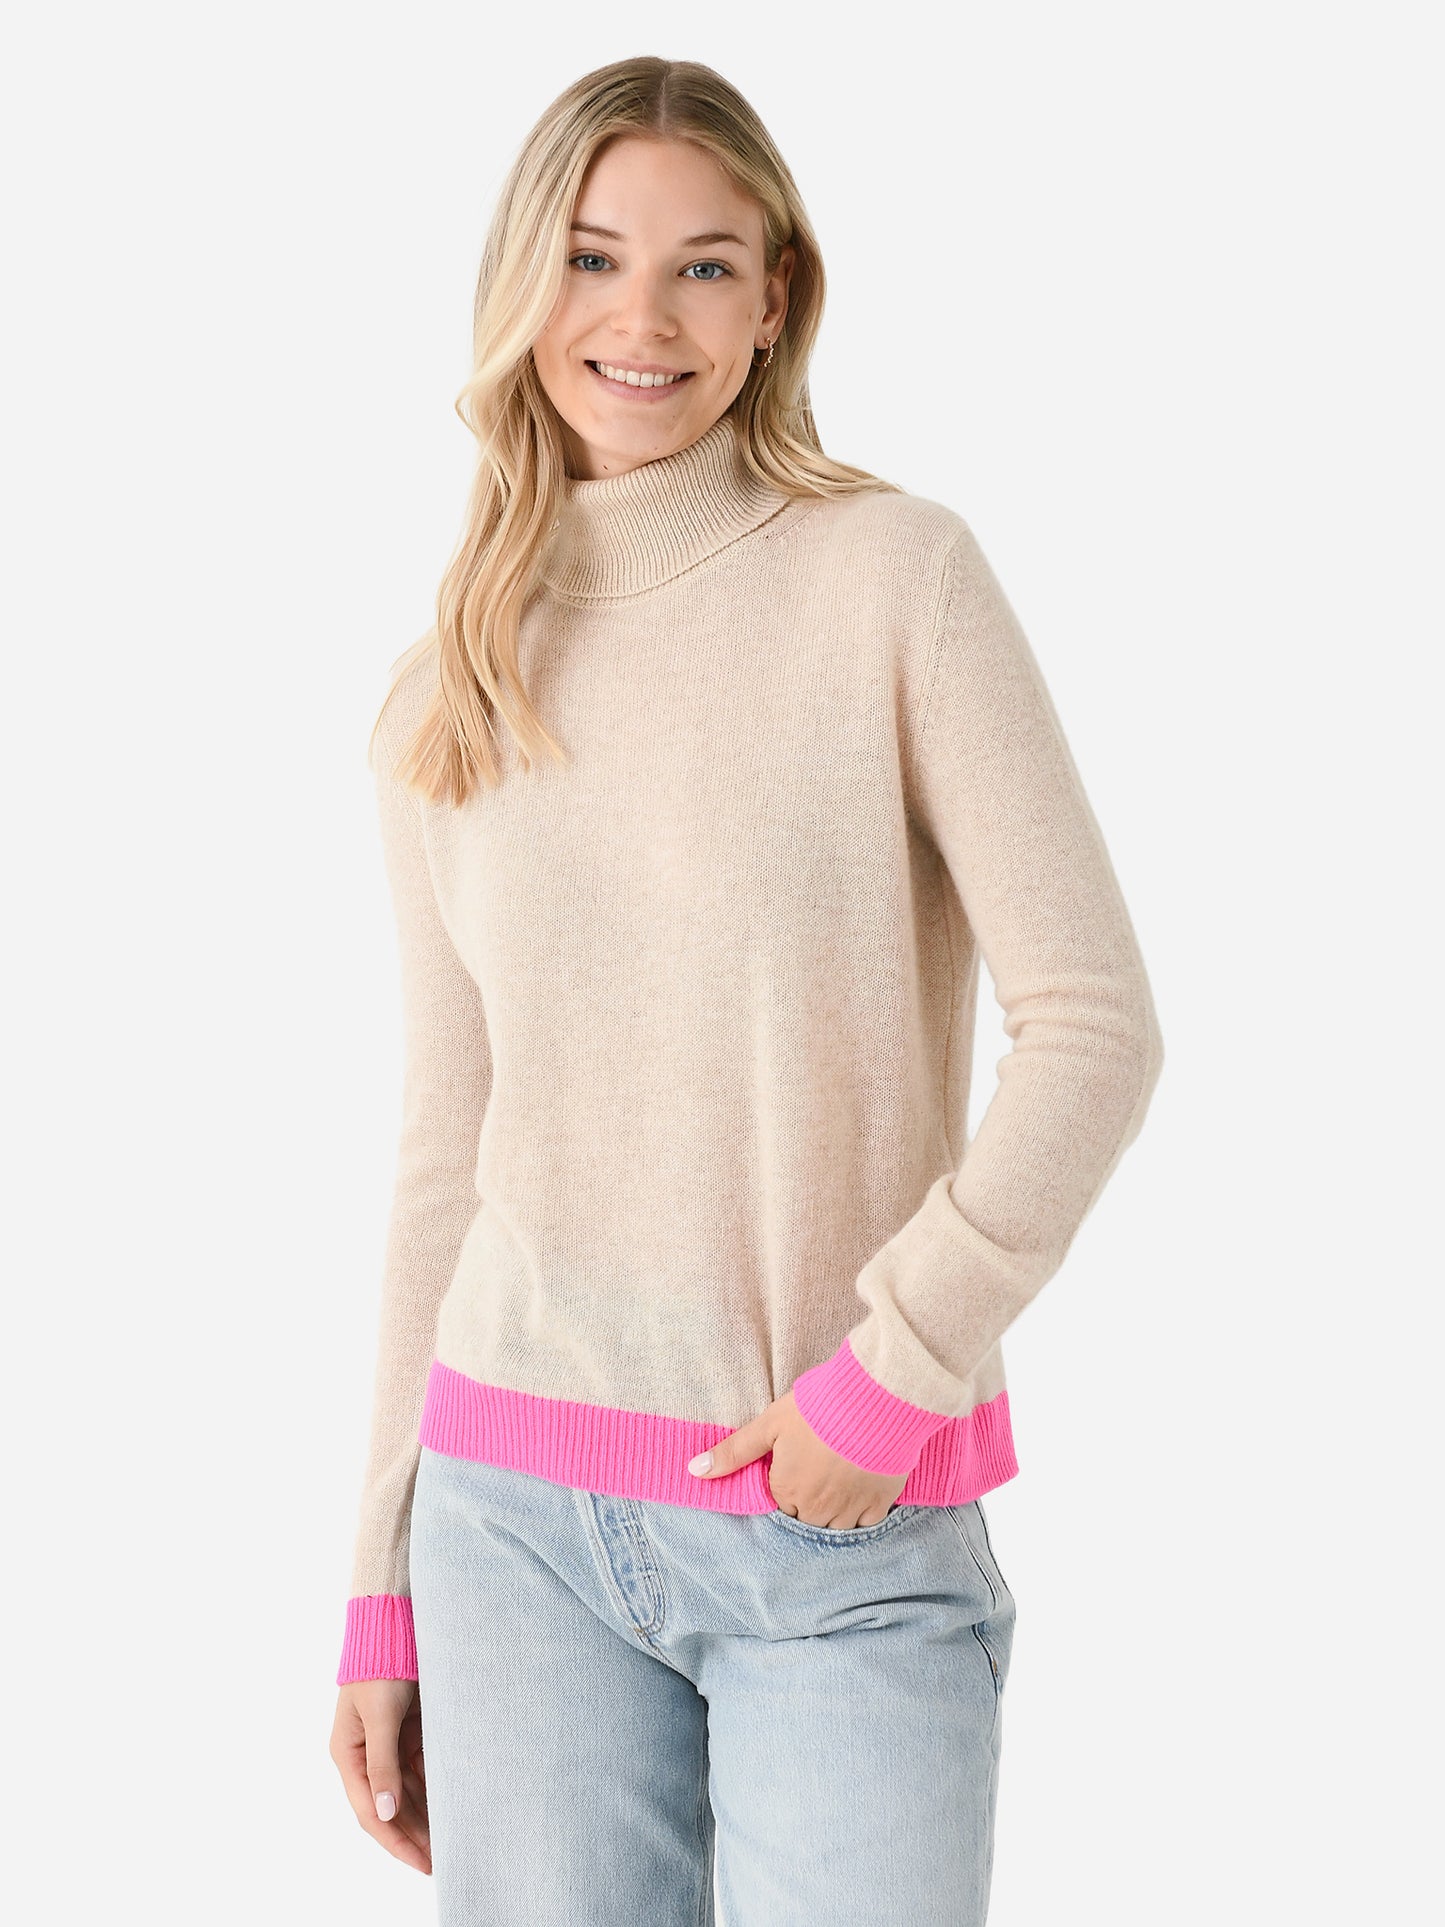 Jumper 1234 Women's Contrast Roll Collar Sweater